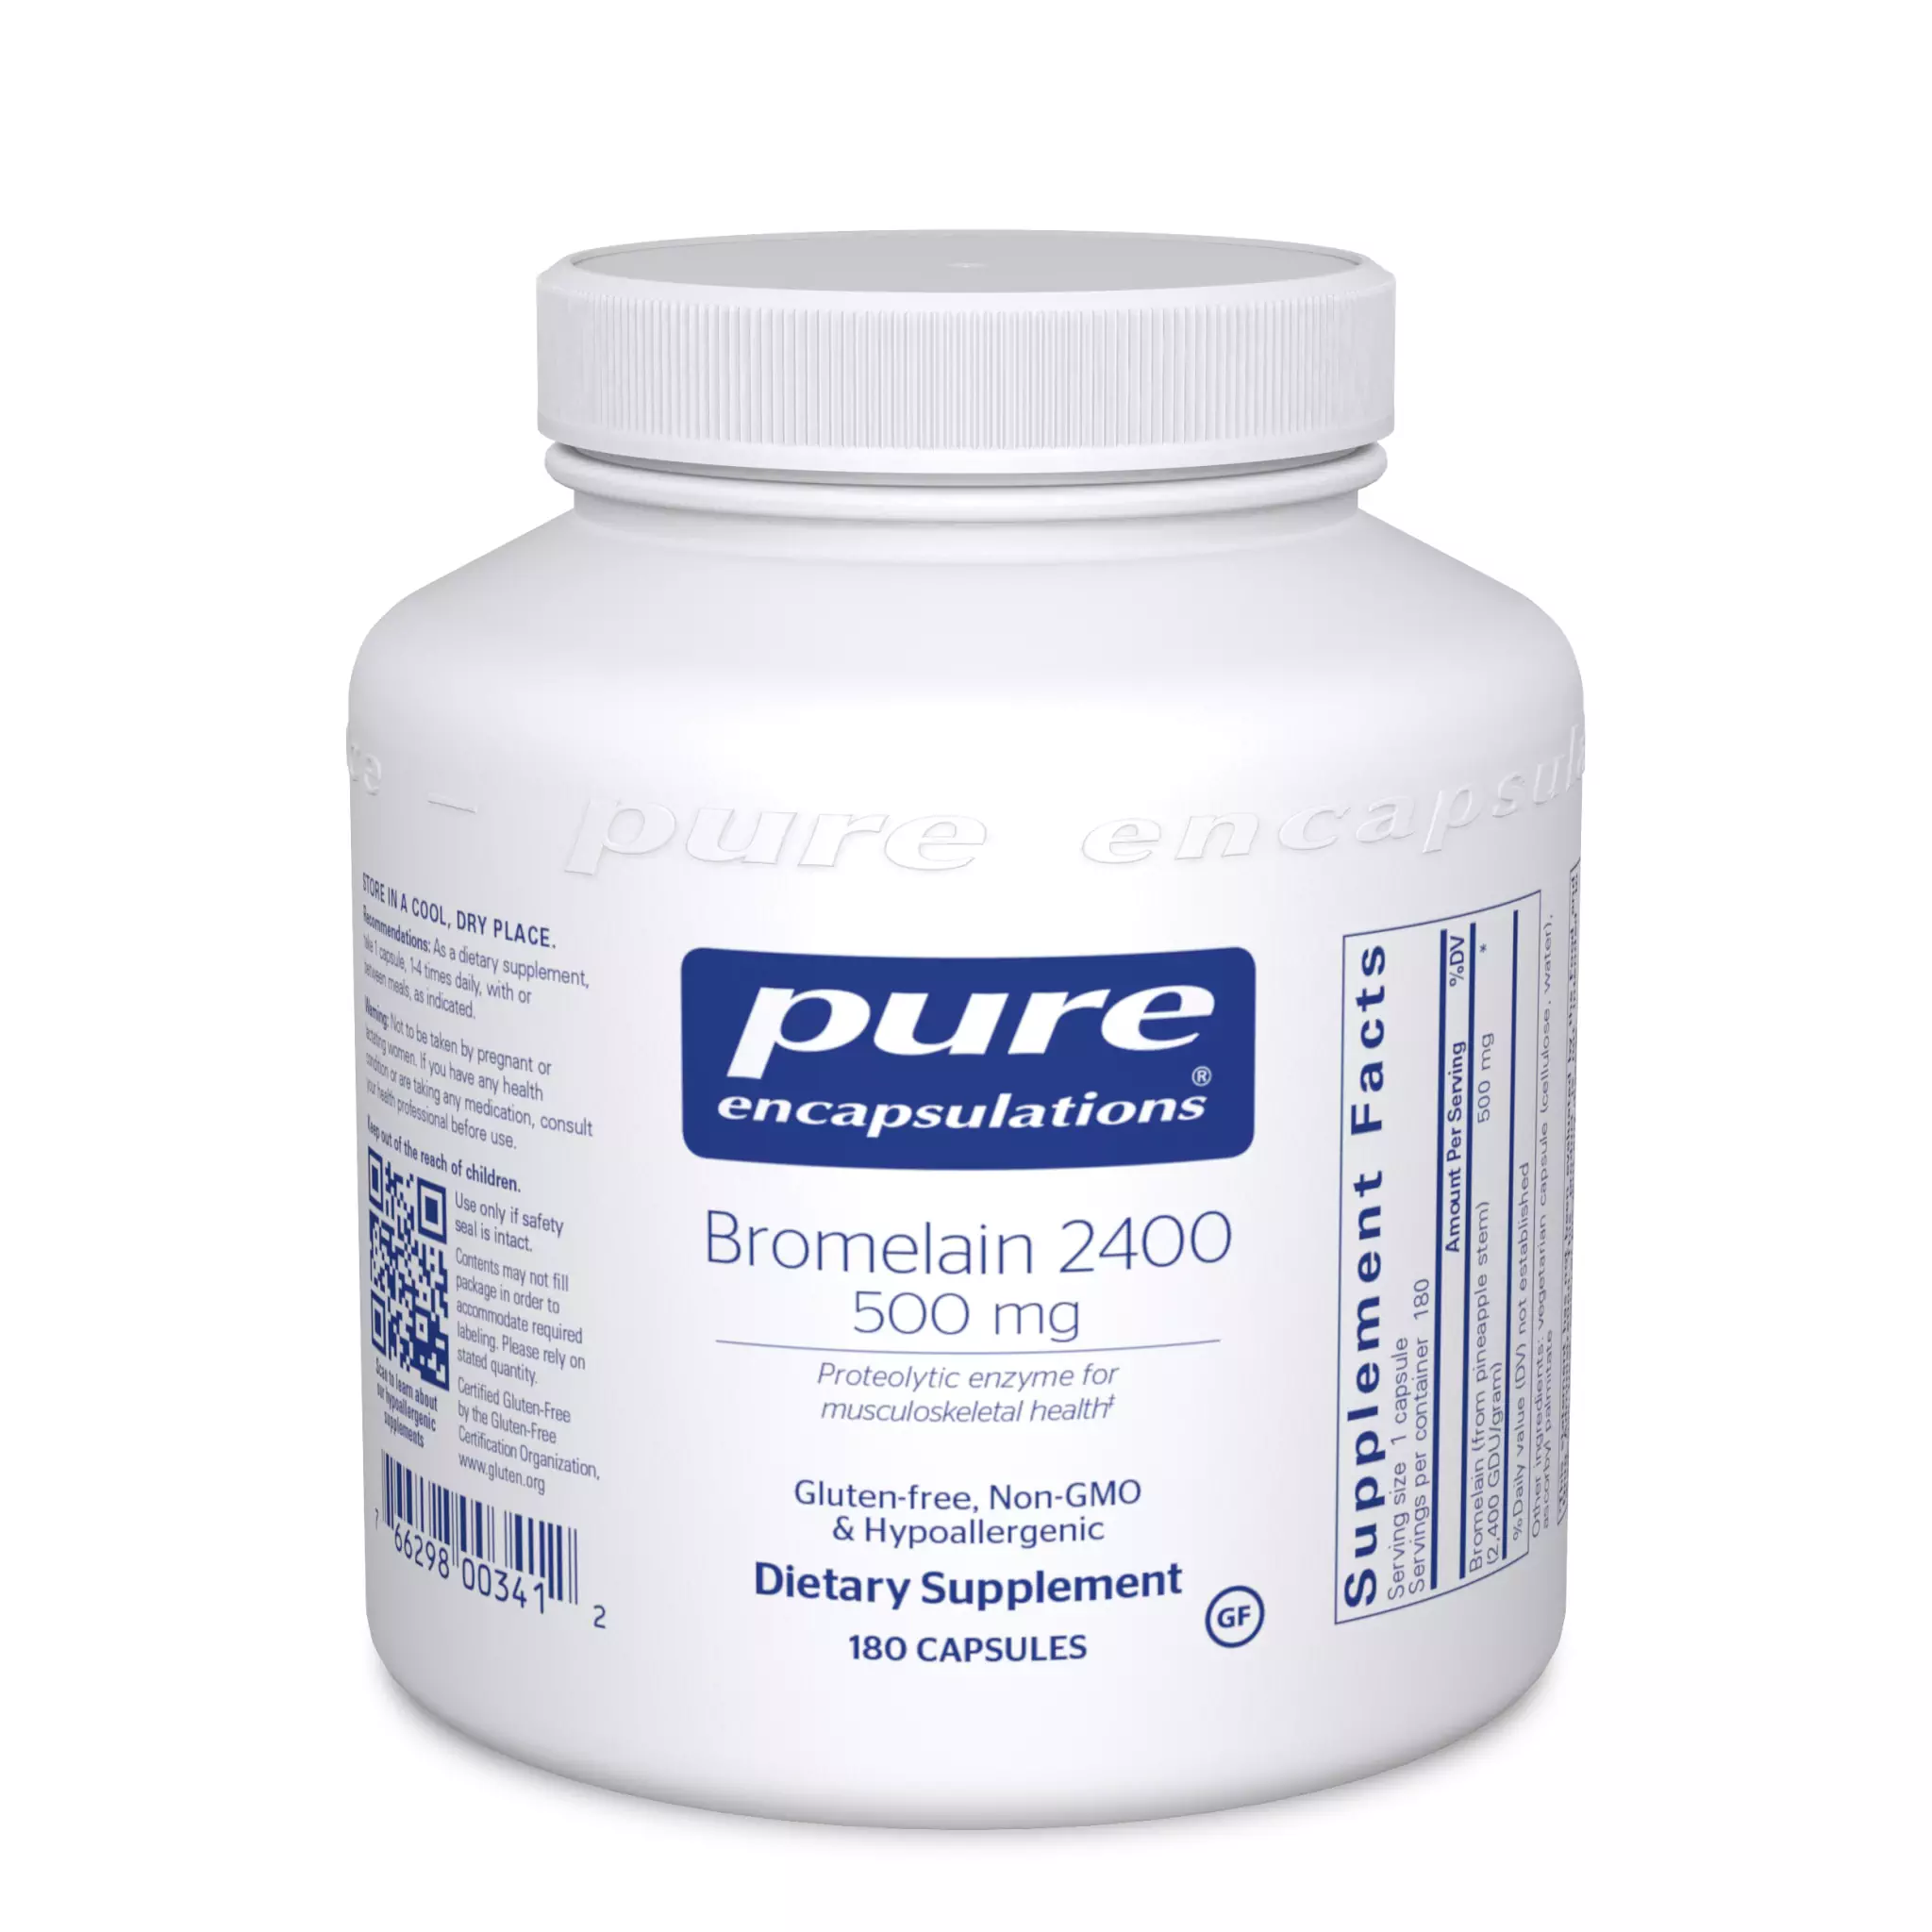 Pure Encapsulations - Bromelain 2400 500 mg